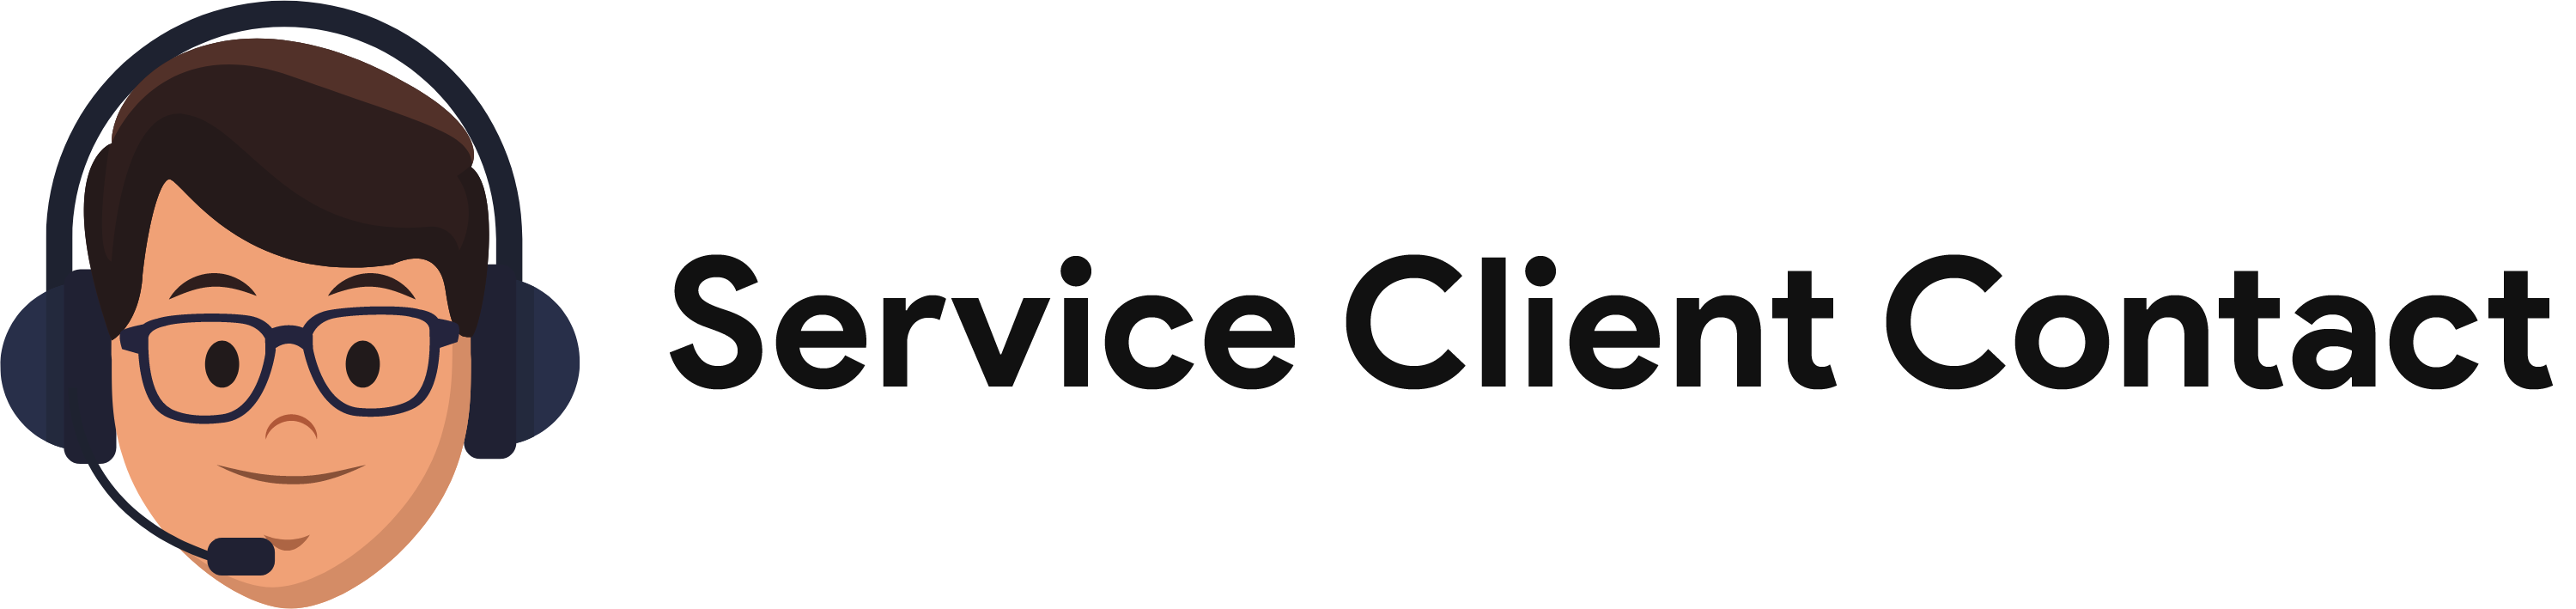 Service Client SAV